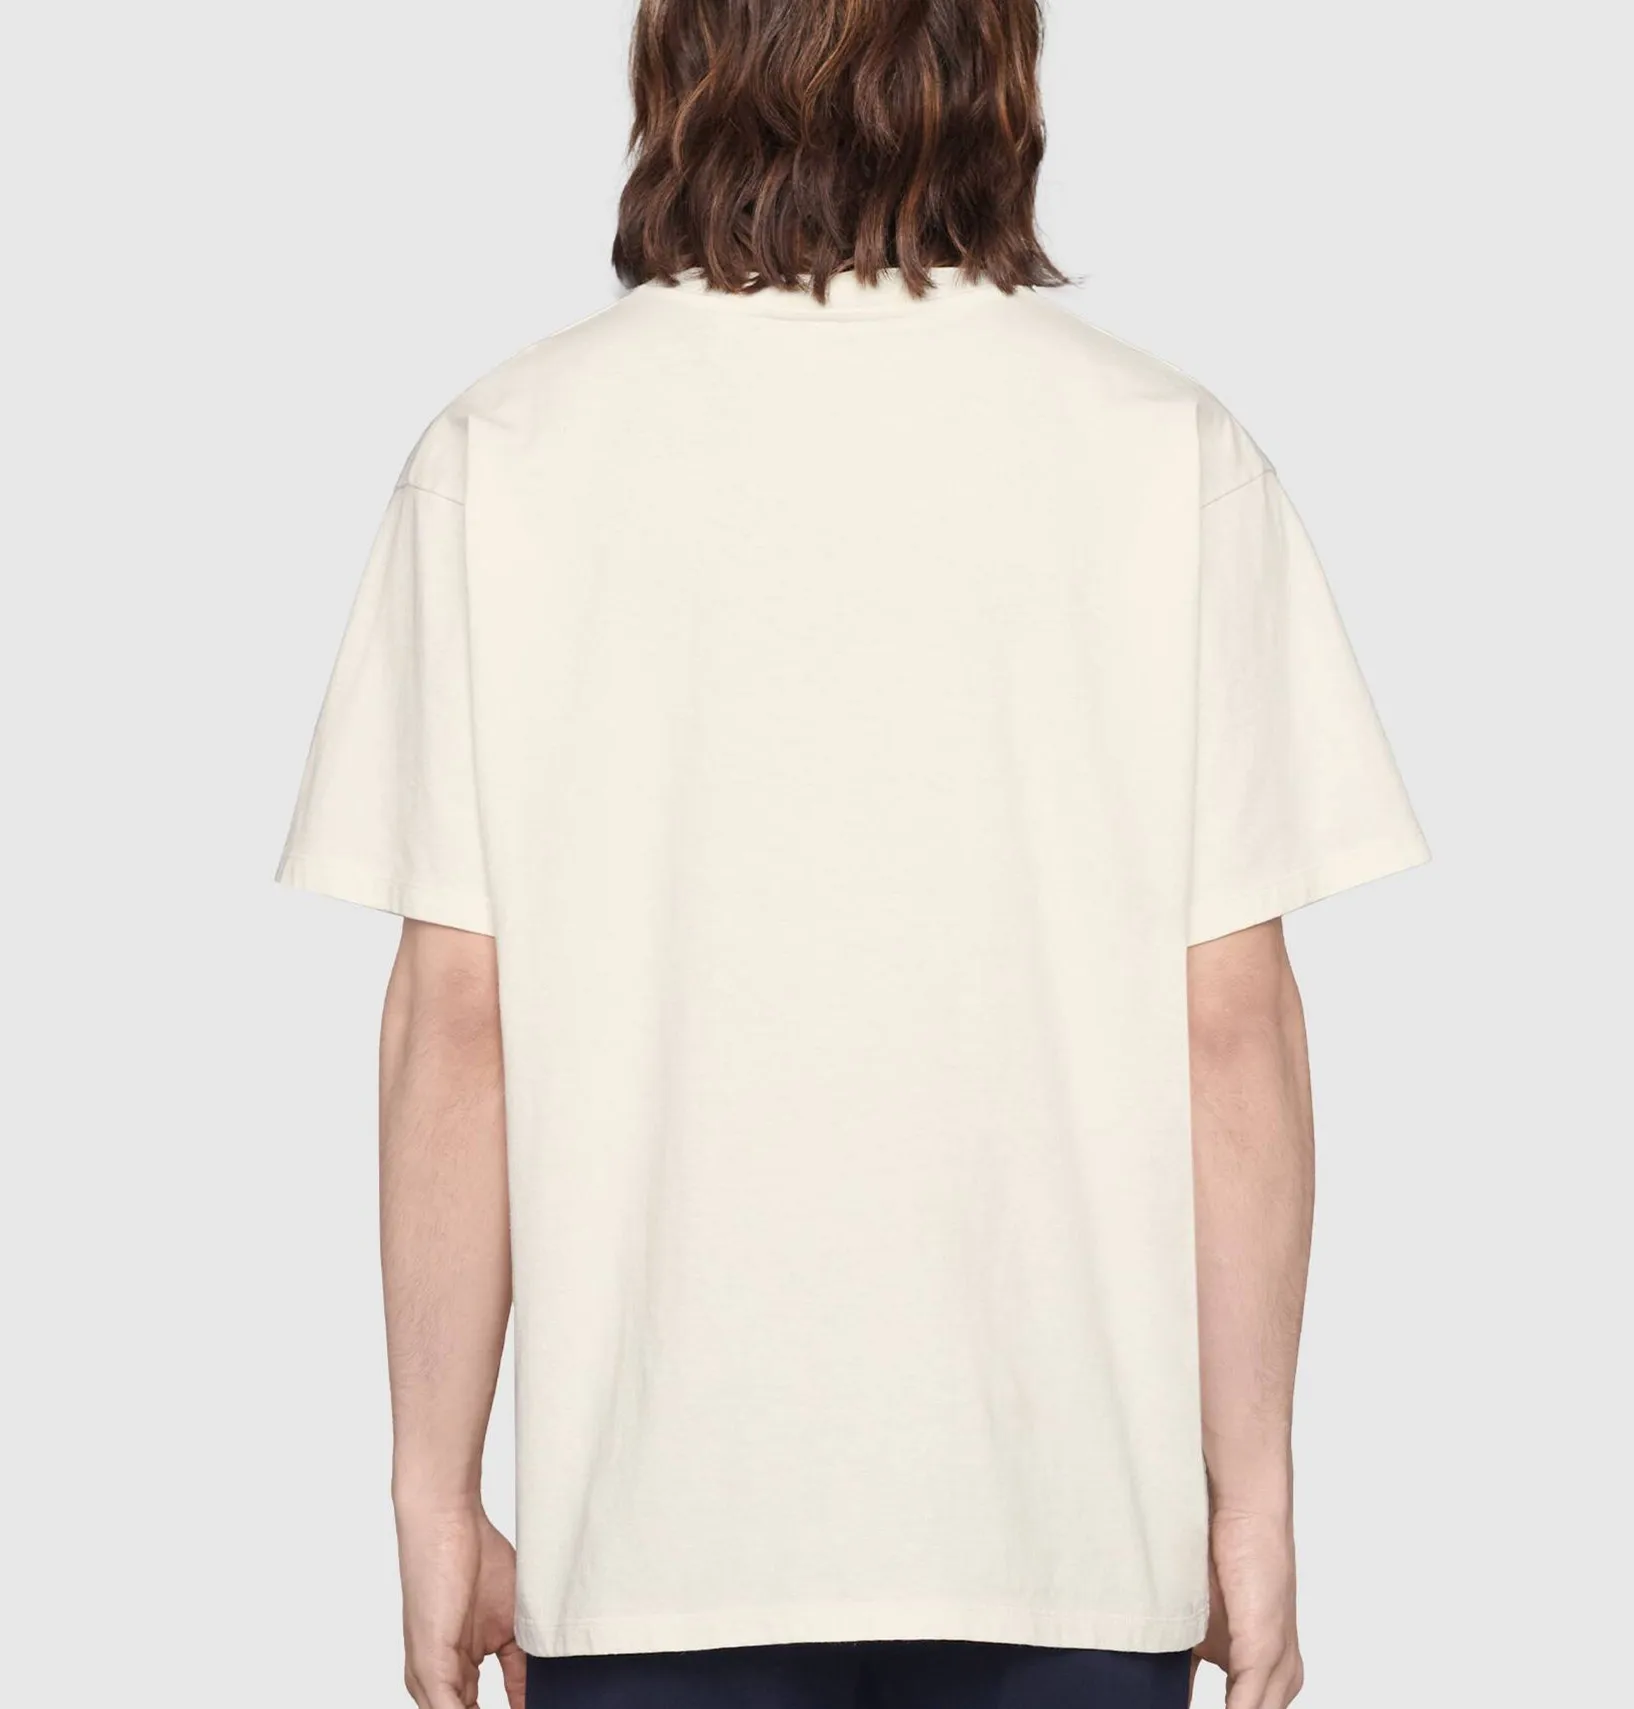 

2021 Classic Logo design Tee Men Women Casual Kith T-shirts Inside Tag High Quality Tops Black/White fashion T-shirt B5